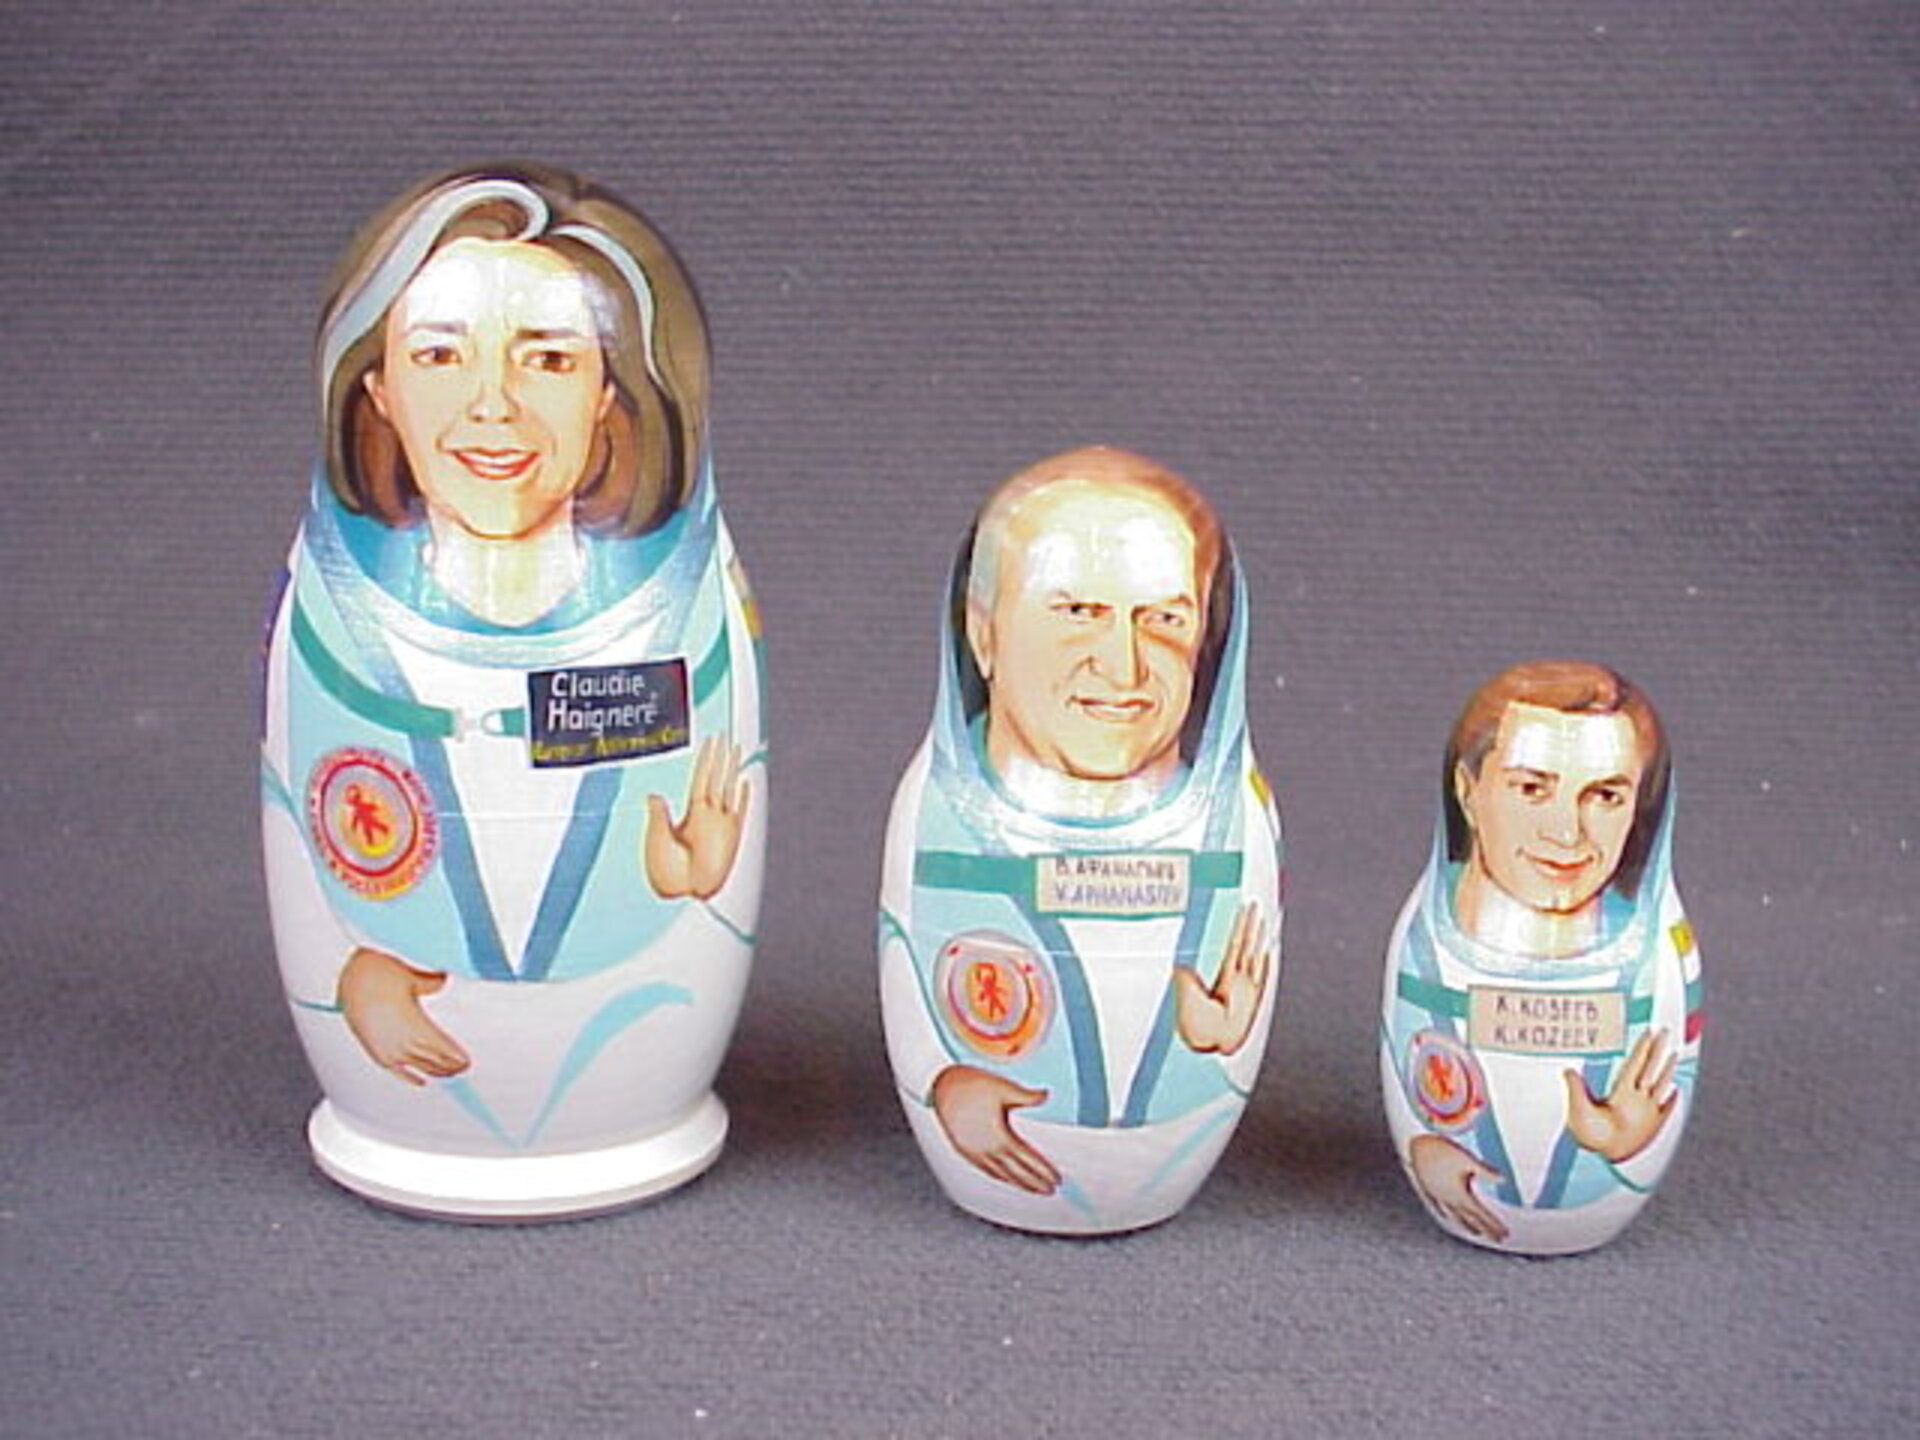 Matrioschka dolls representing Andromède mission crew